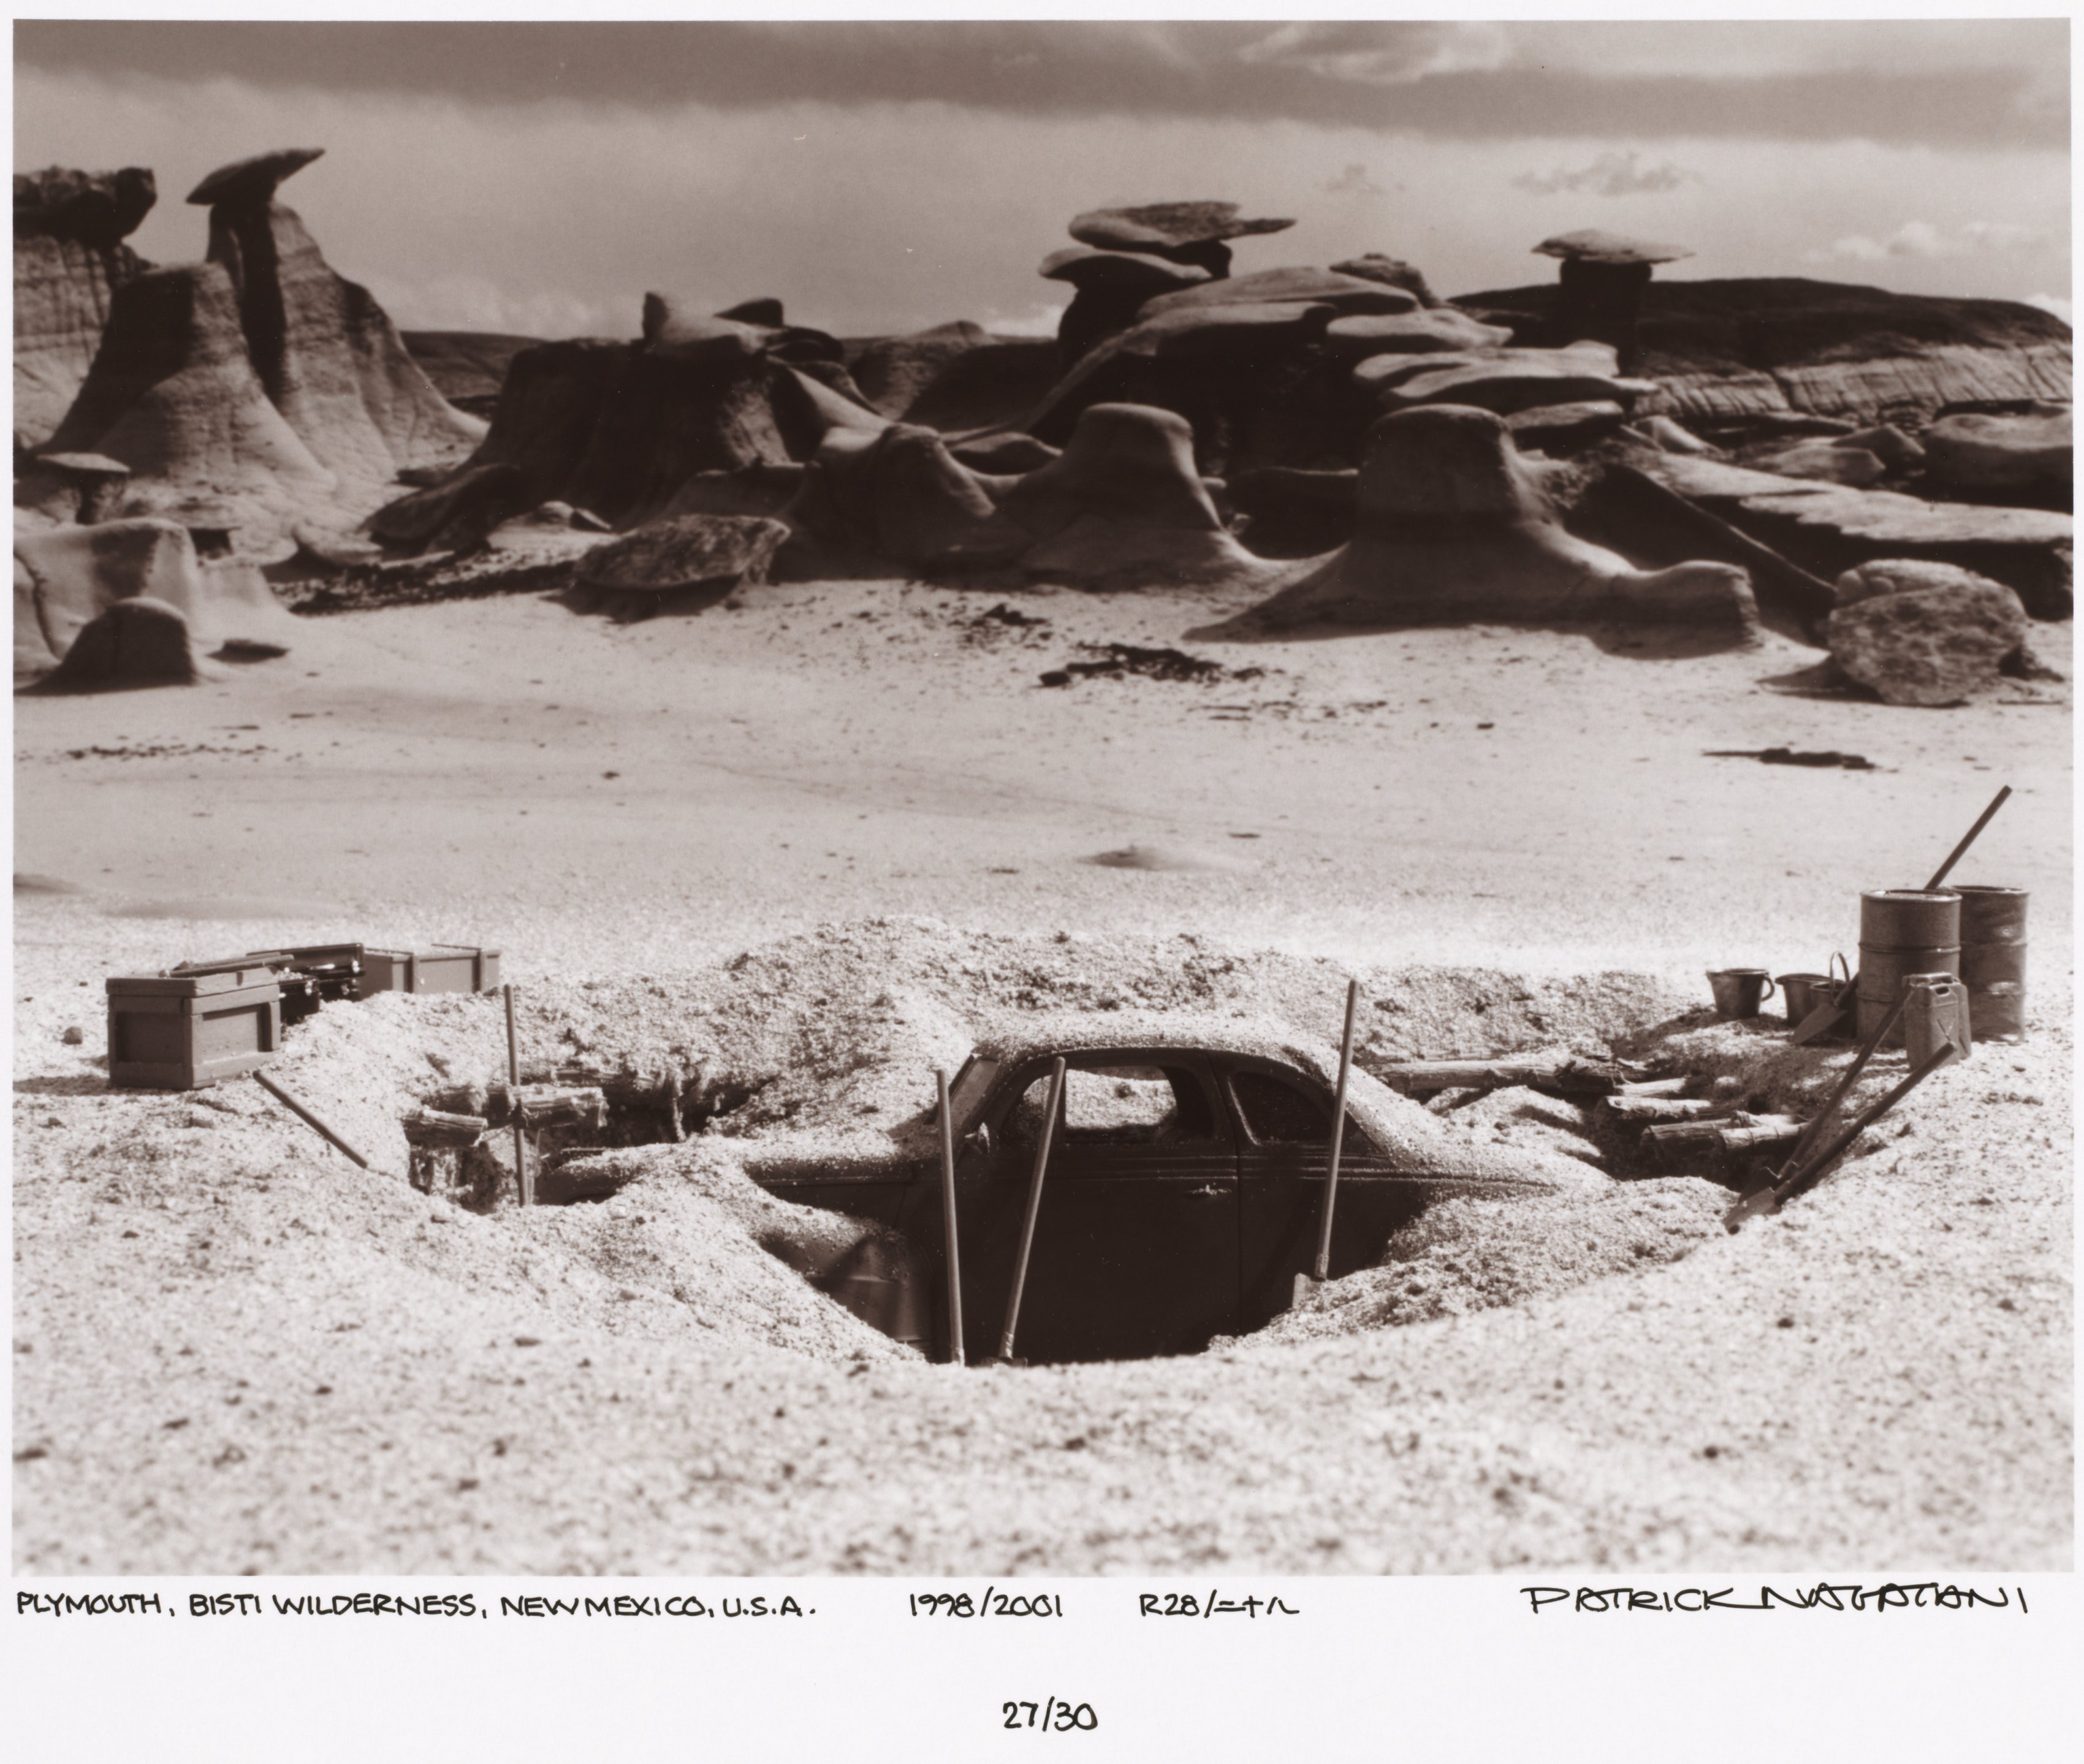 1941 Plymouth, Bisti Wilderness, New Mexico, U.S.A. (R28)